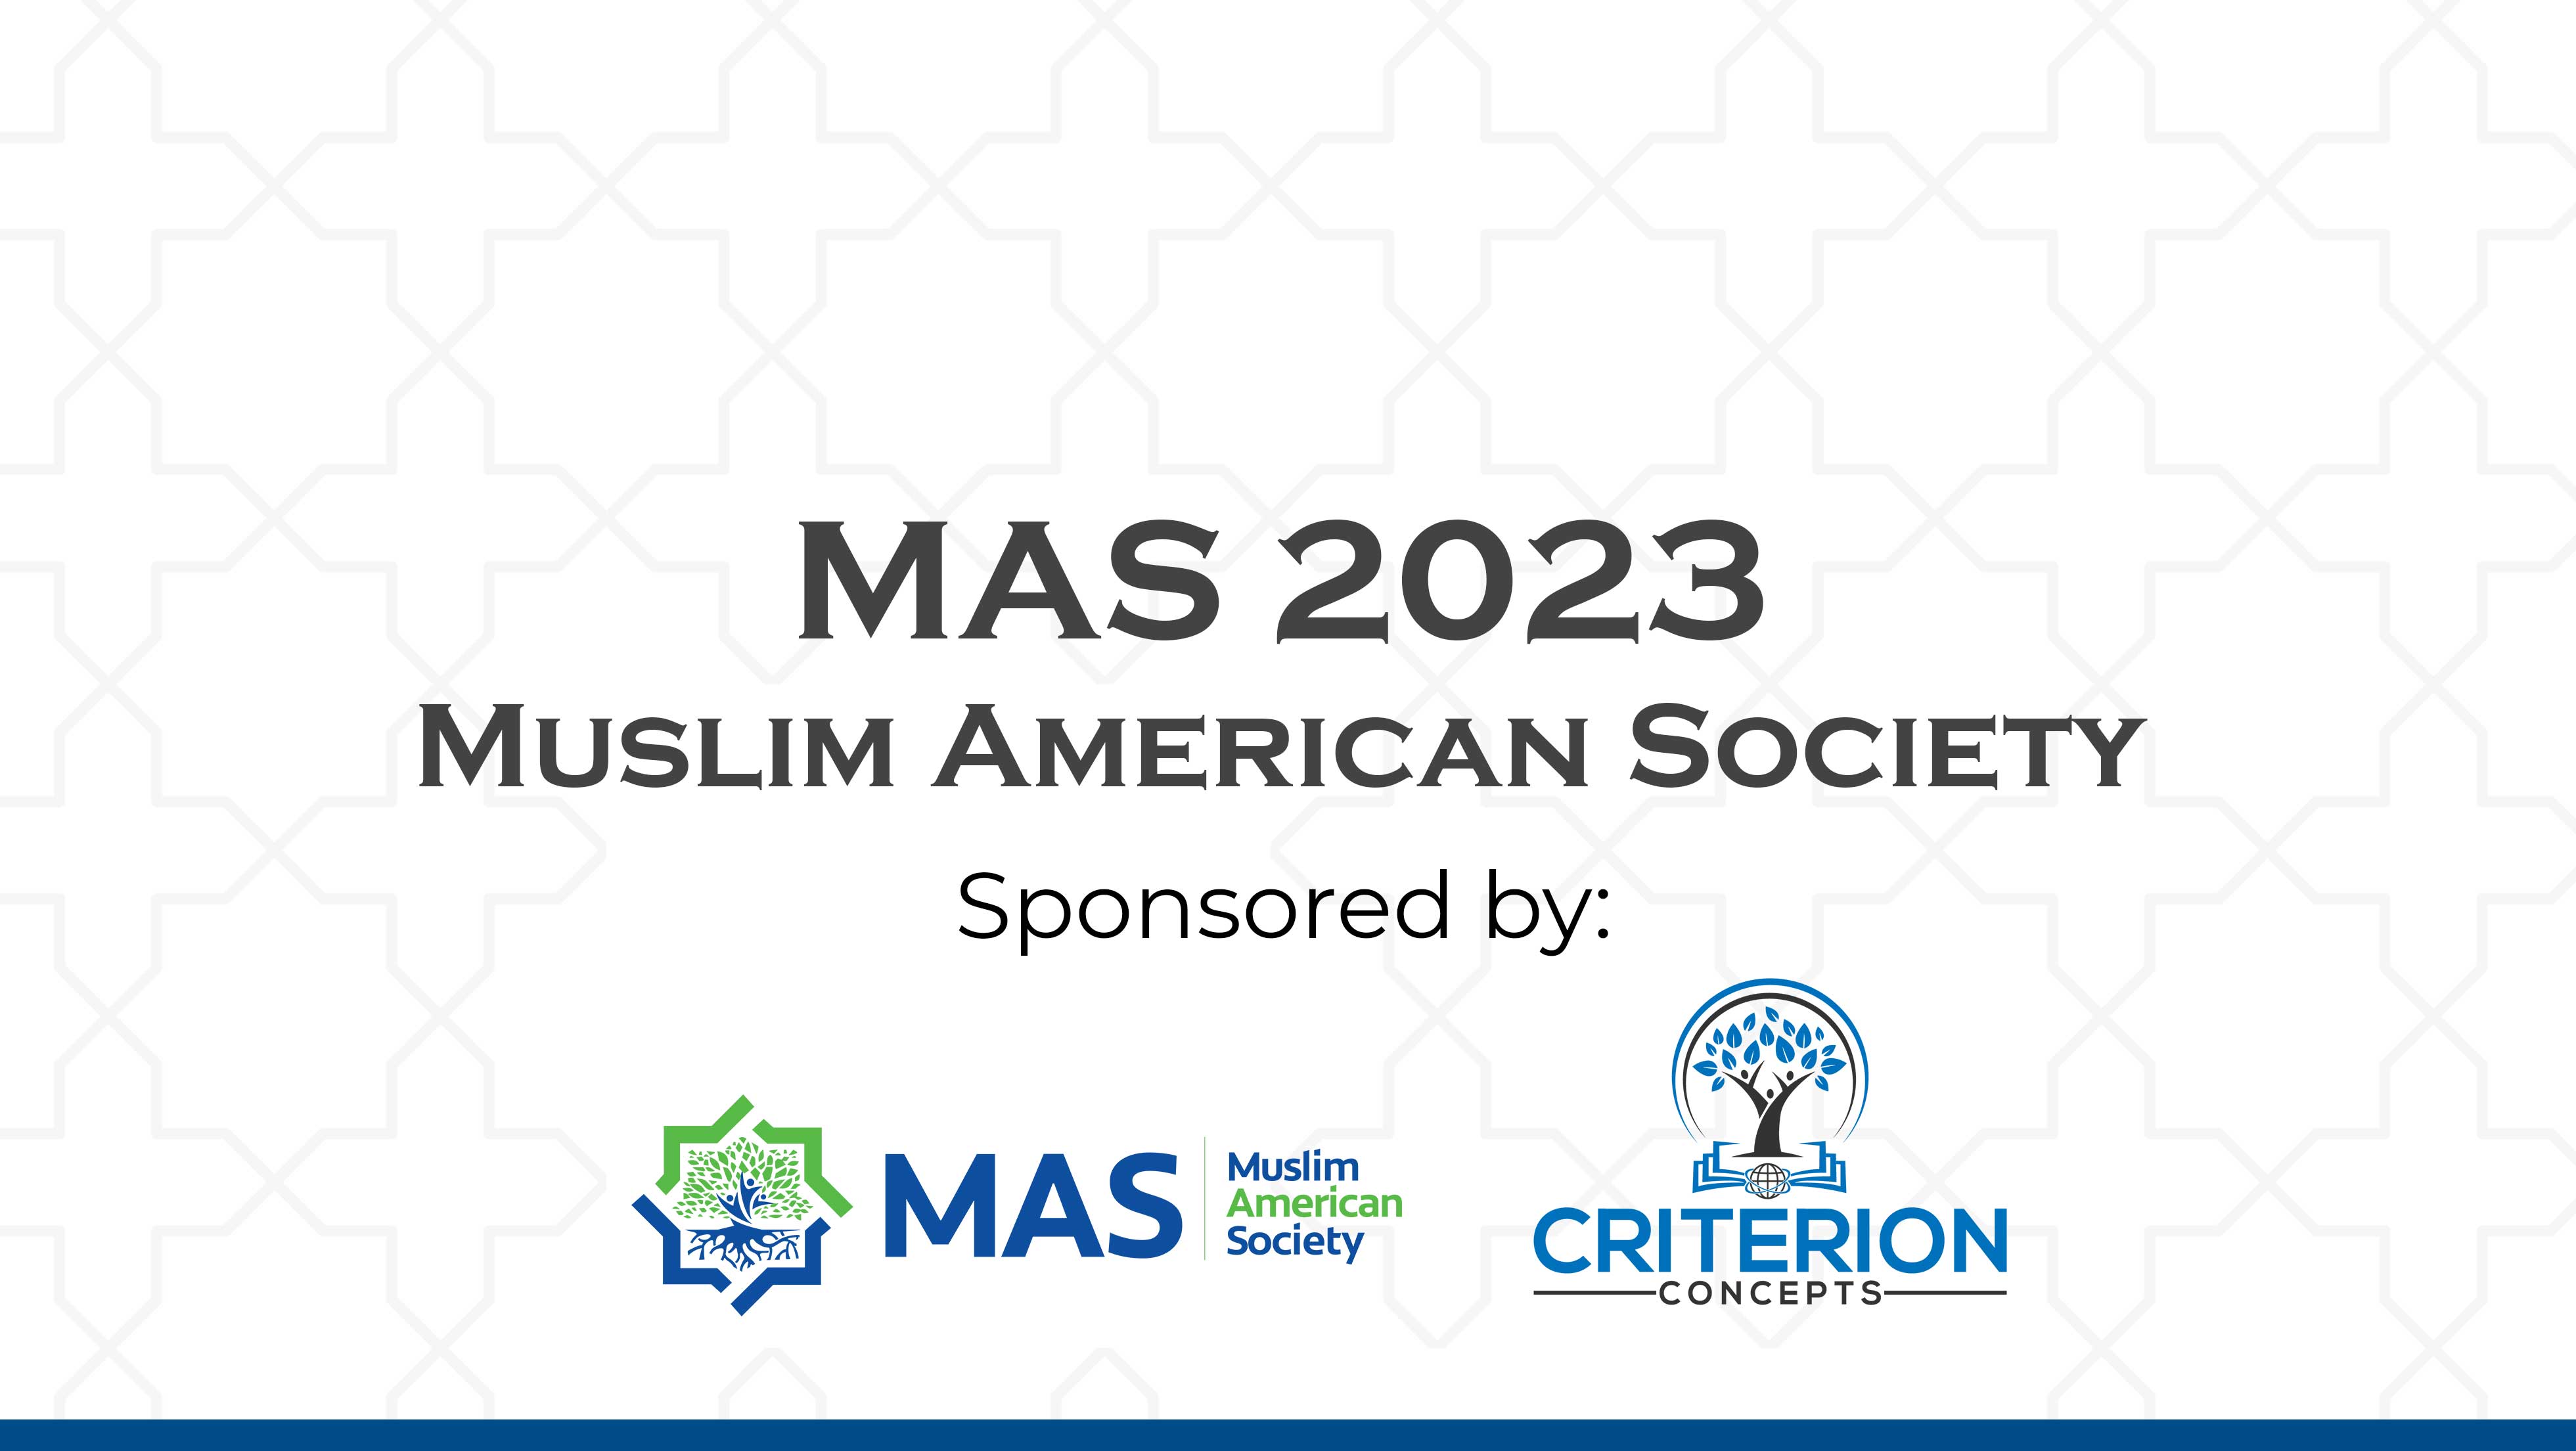 MAS - Muslim American Society 2023